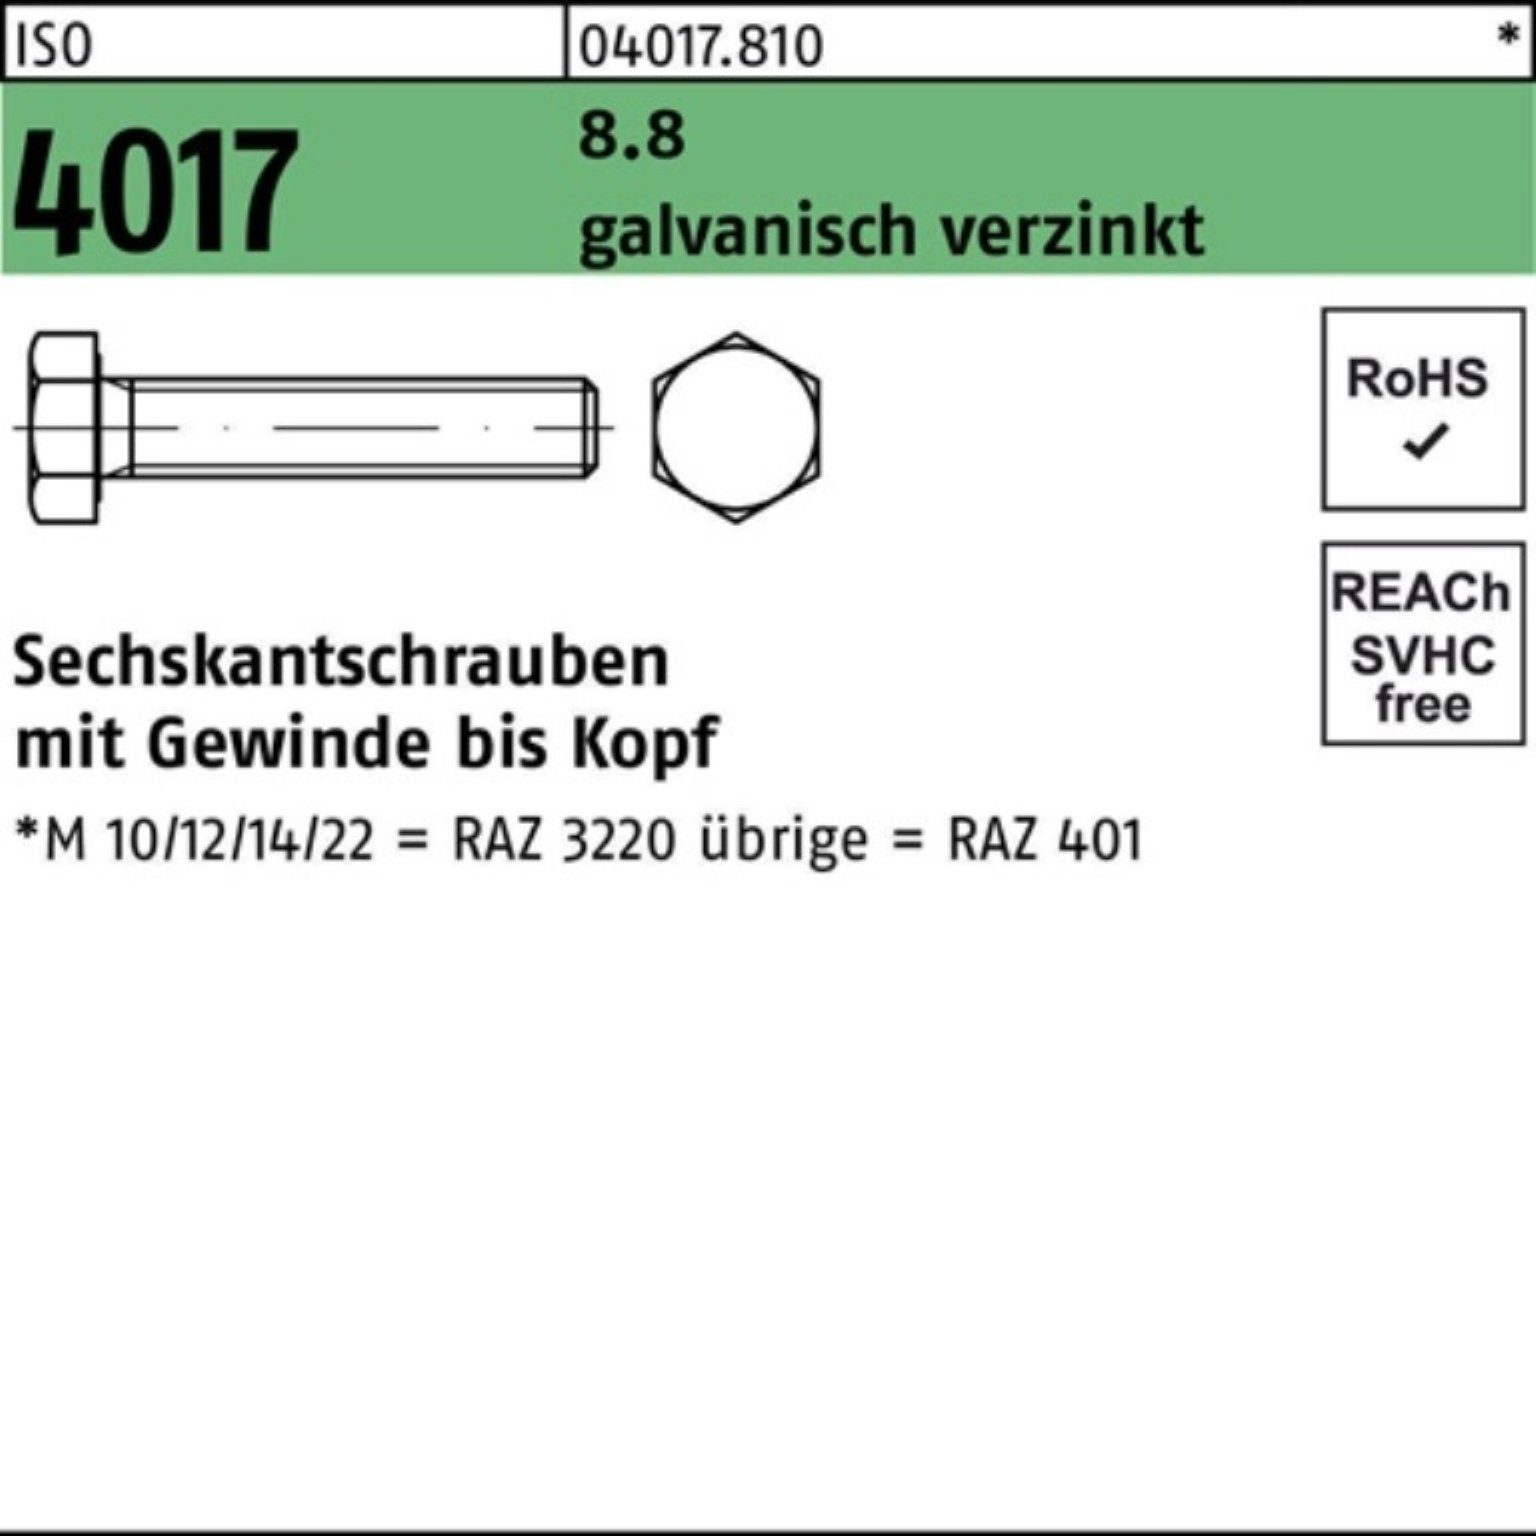 M42x galv.verz. VG 100er Sechskantschraube Pack 120 Sechskantschraube Bufab 4017 1 8.8 ISO St